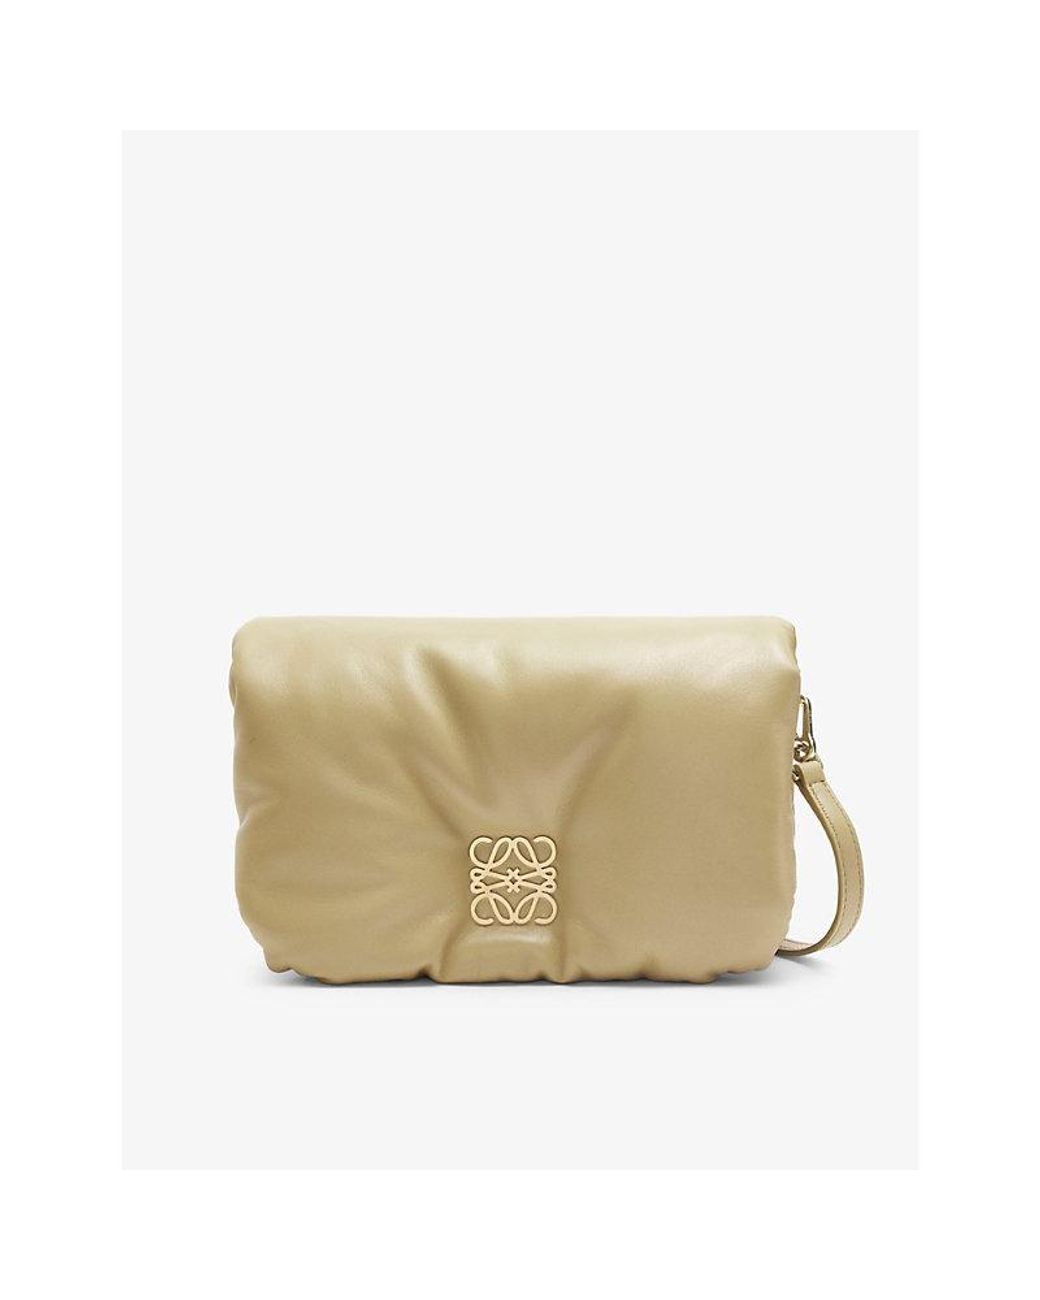 Loewe Puffer Goya Mini Leather Shoulder Bag in Natural